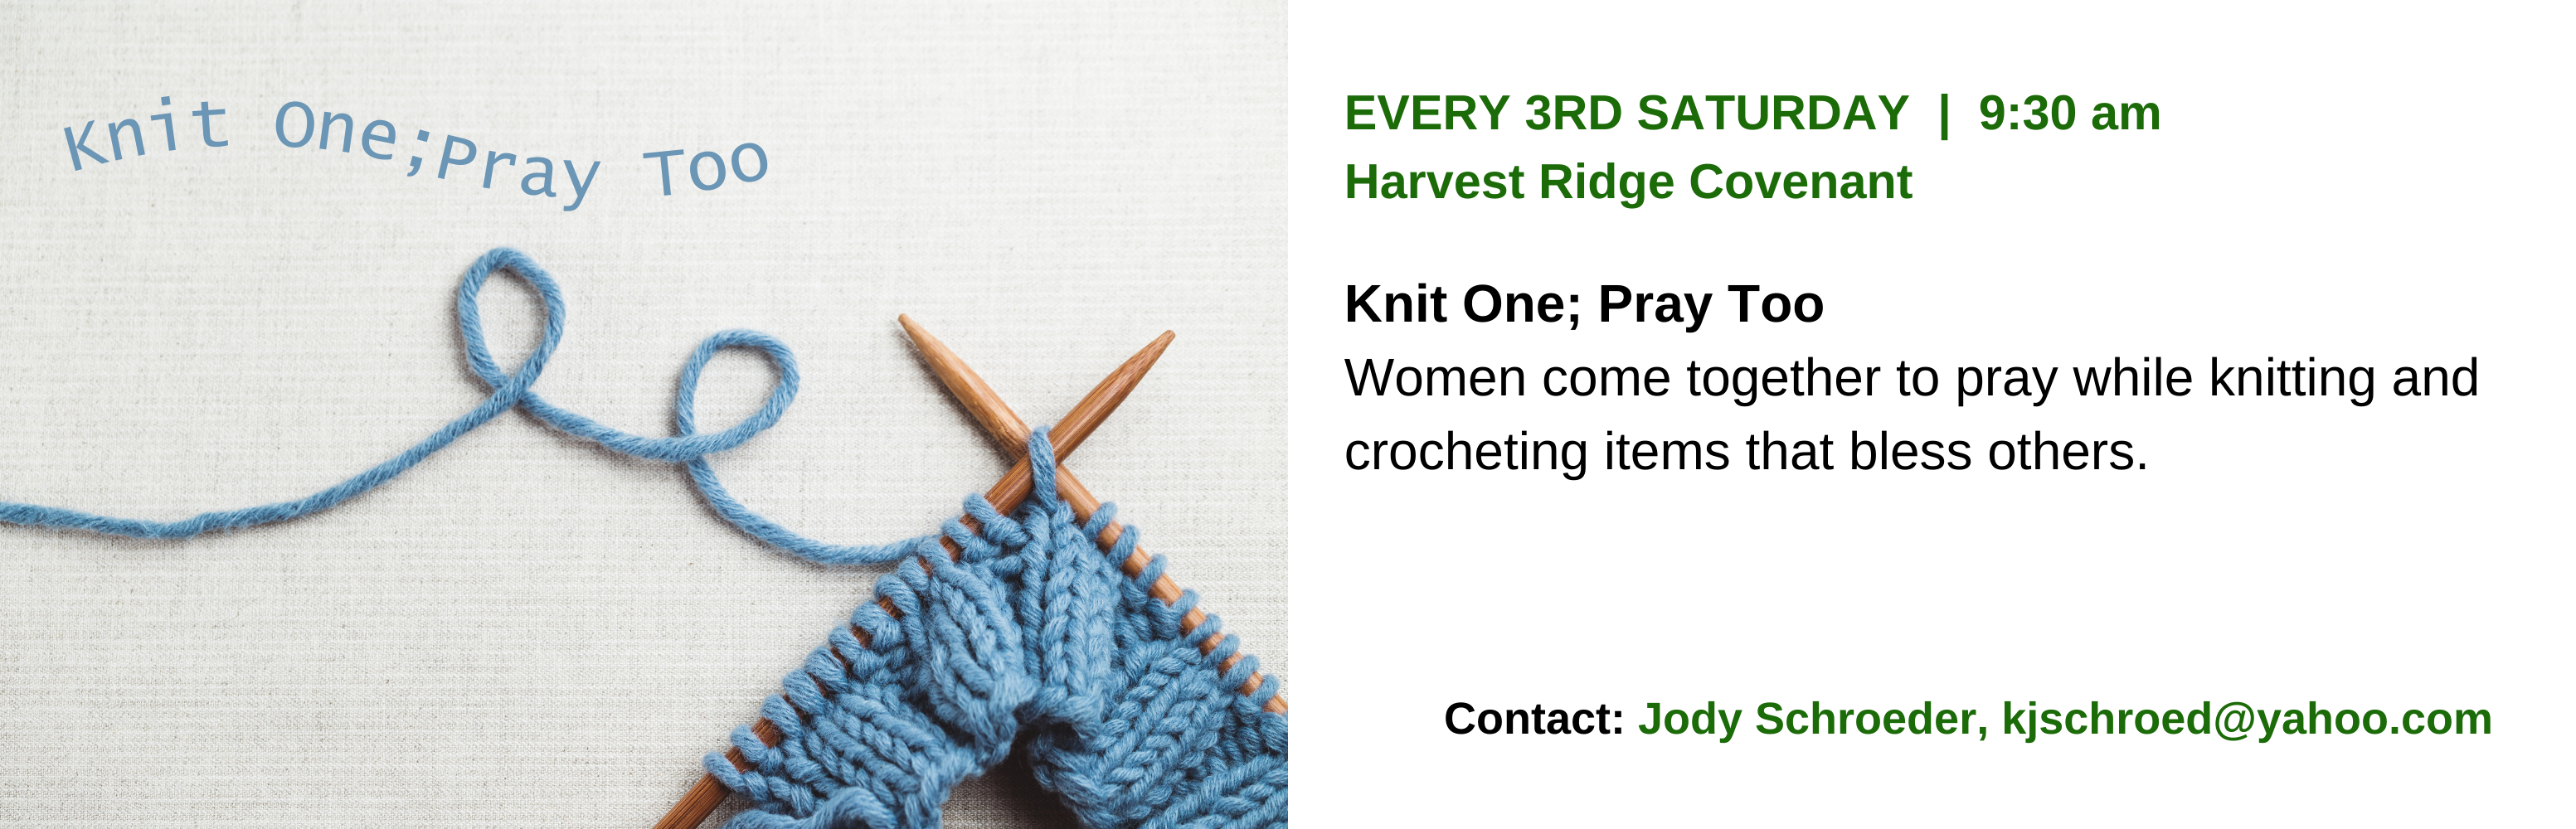 Knit one Pray too website event